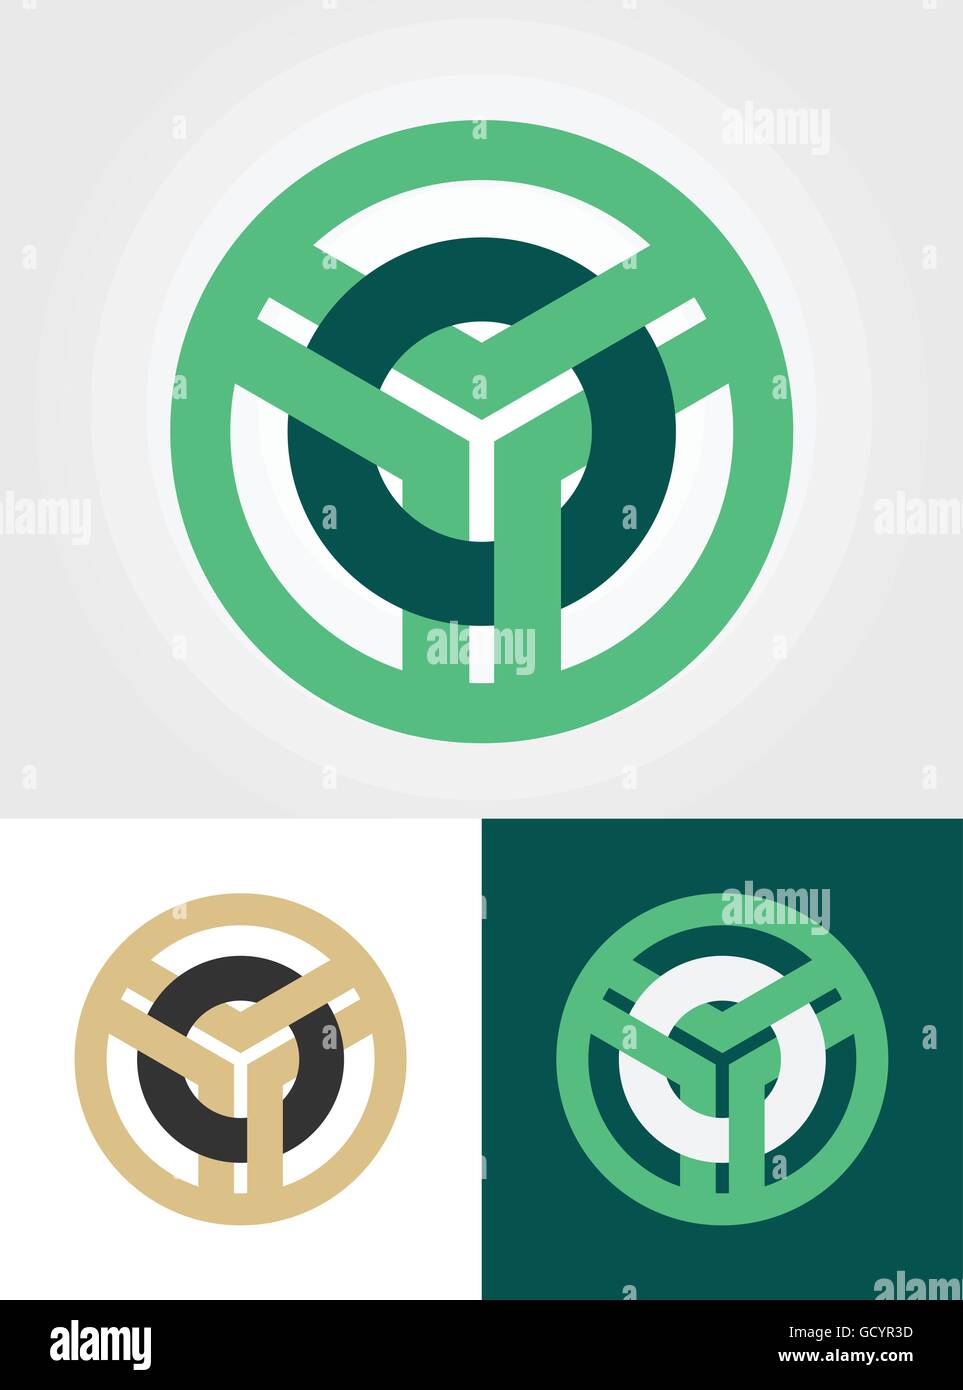 abstract overlaped circled emblem vector logo illustration Stock Vector